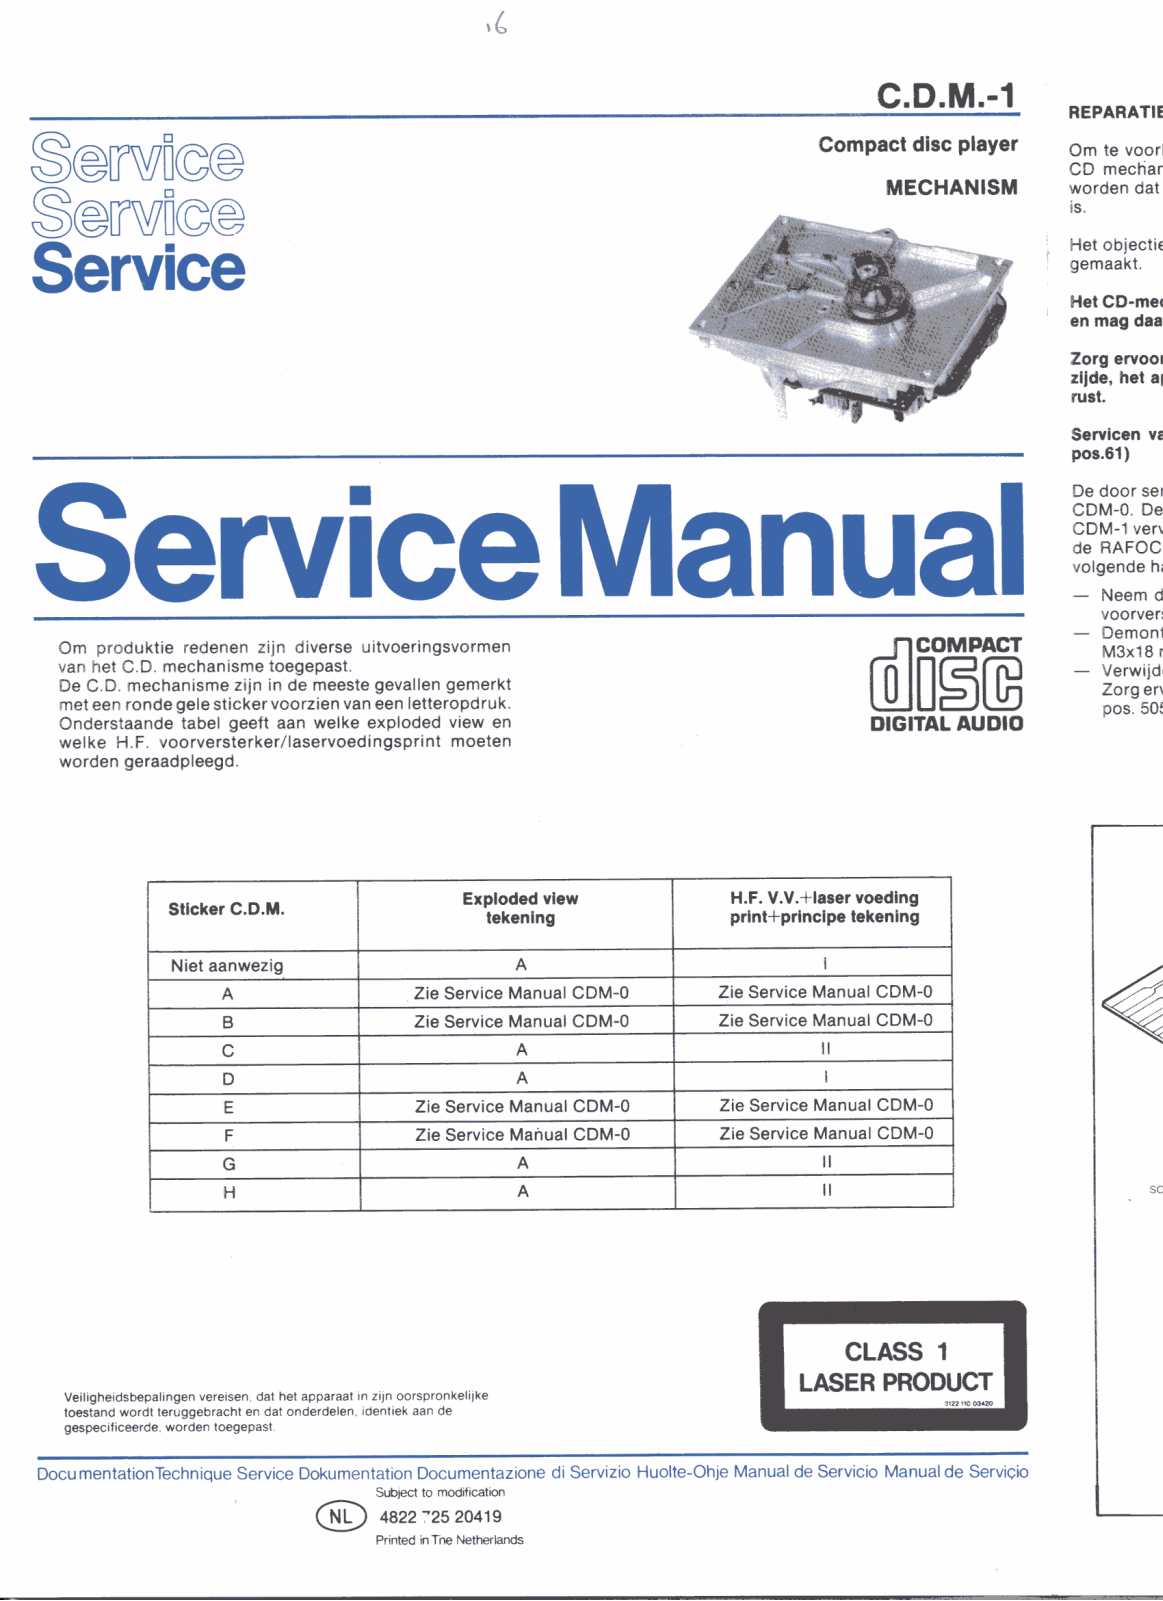 Philips CDM-1 Service Manual